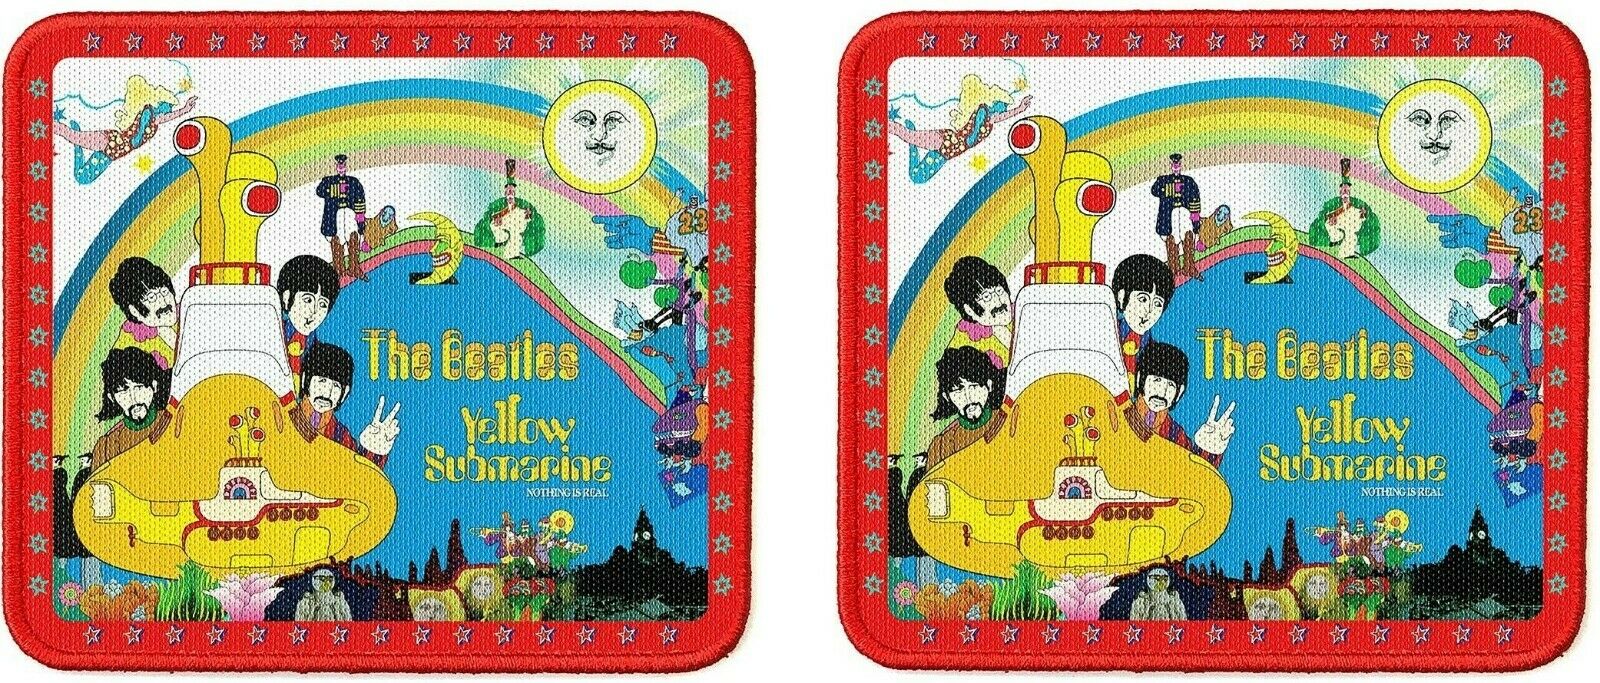 The Beatles Yellow Submarine Stars Border Patch [set Of 2] Memorabilia Souvenir